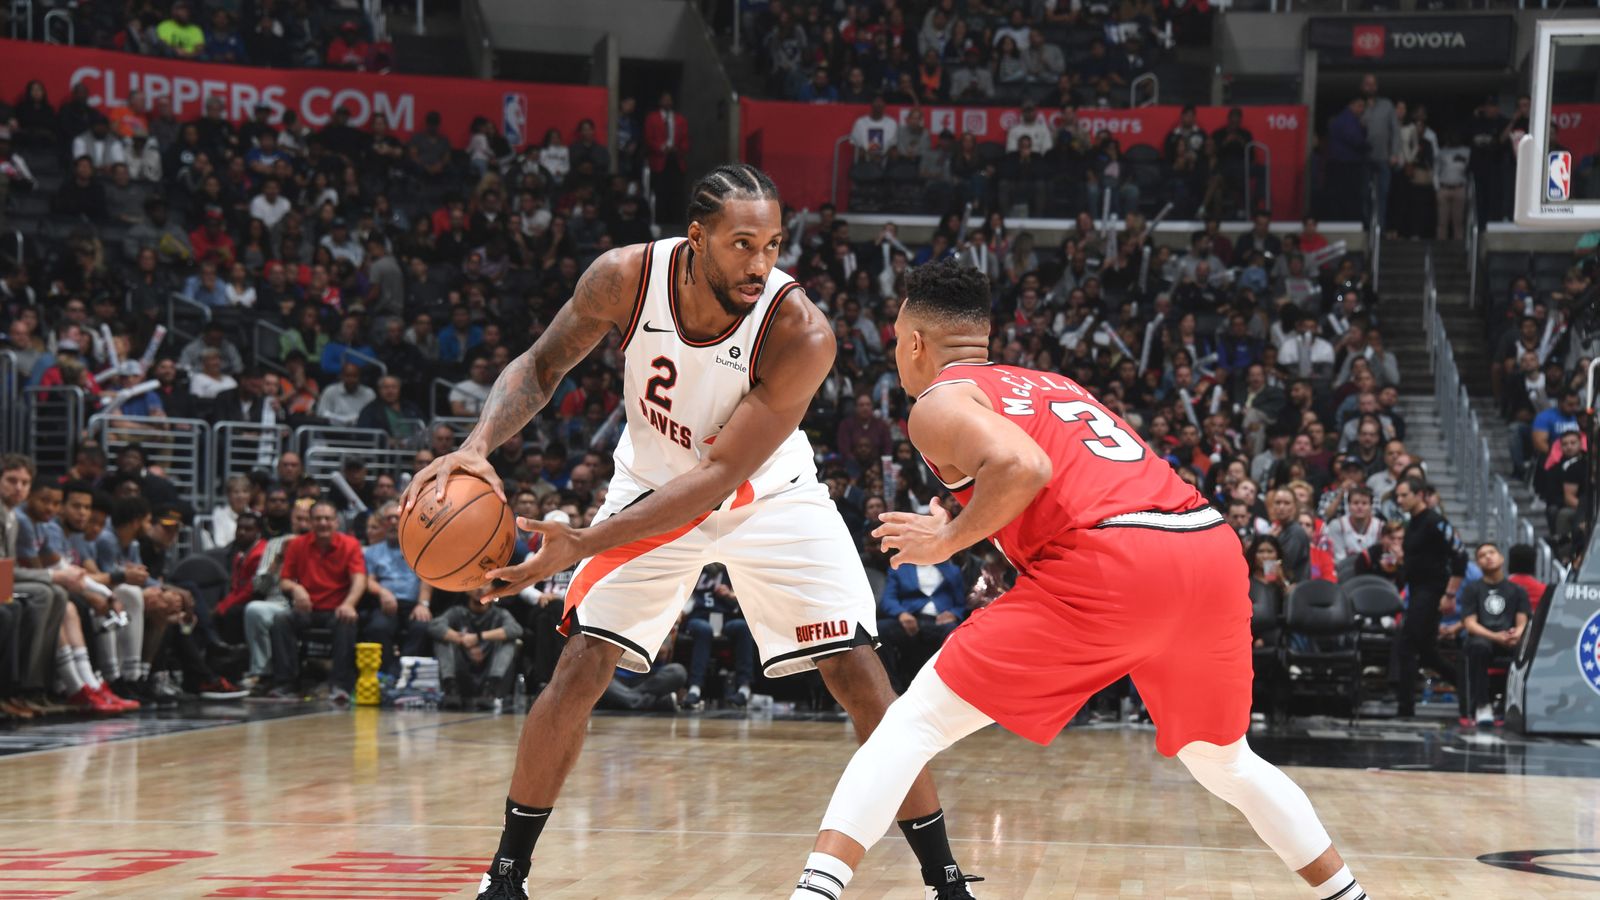 Kawhi Leonard scores 27 points as Clippers rally past Blazers, NBA News